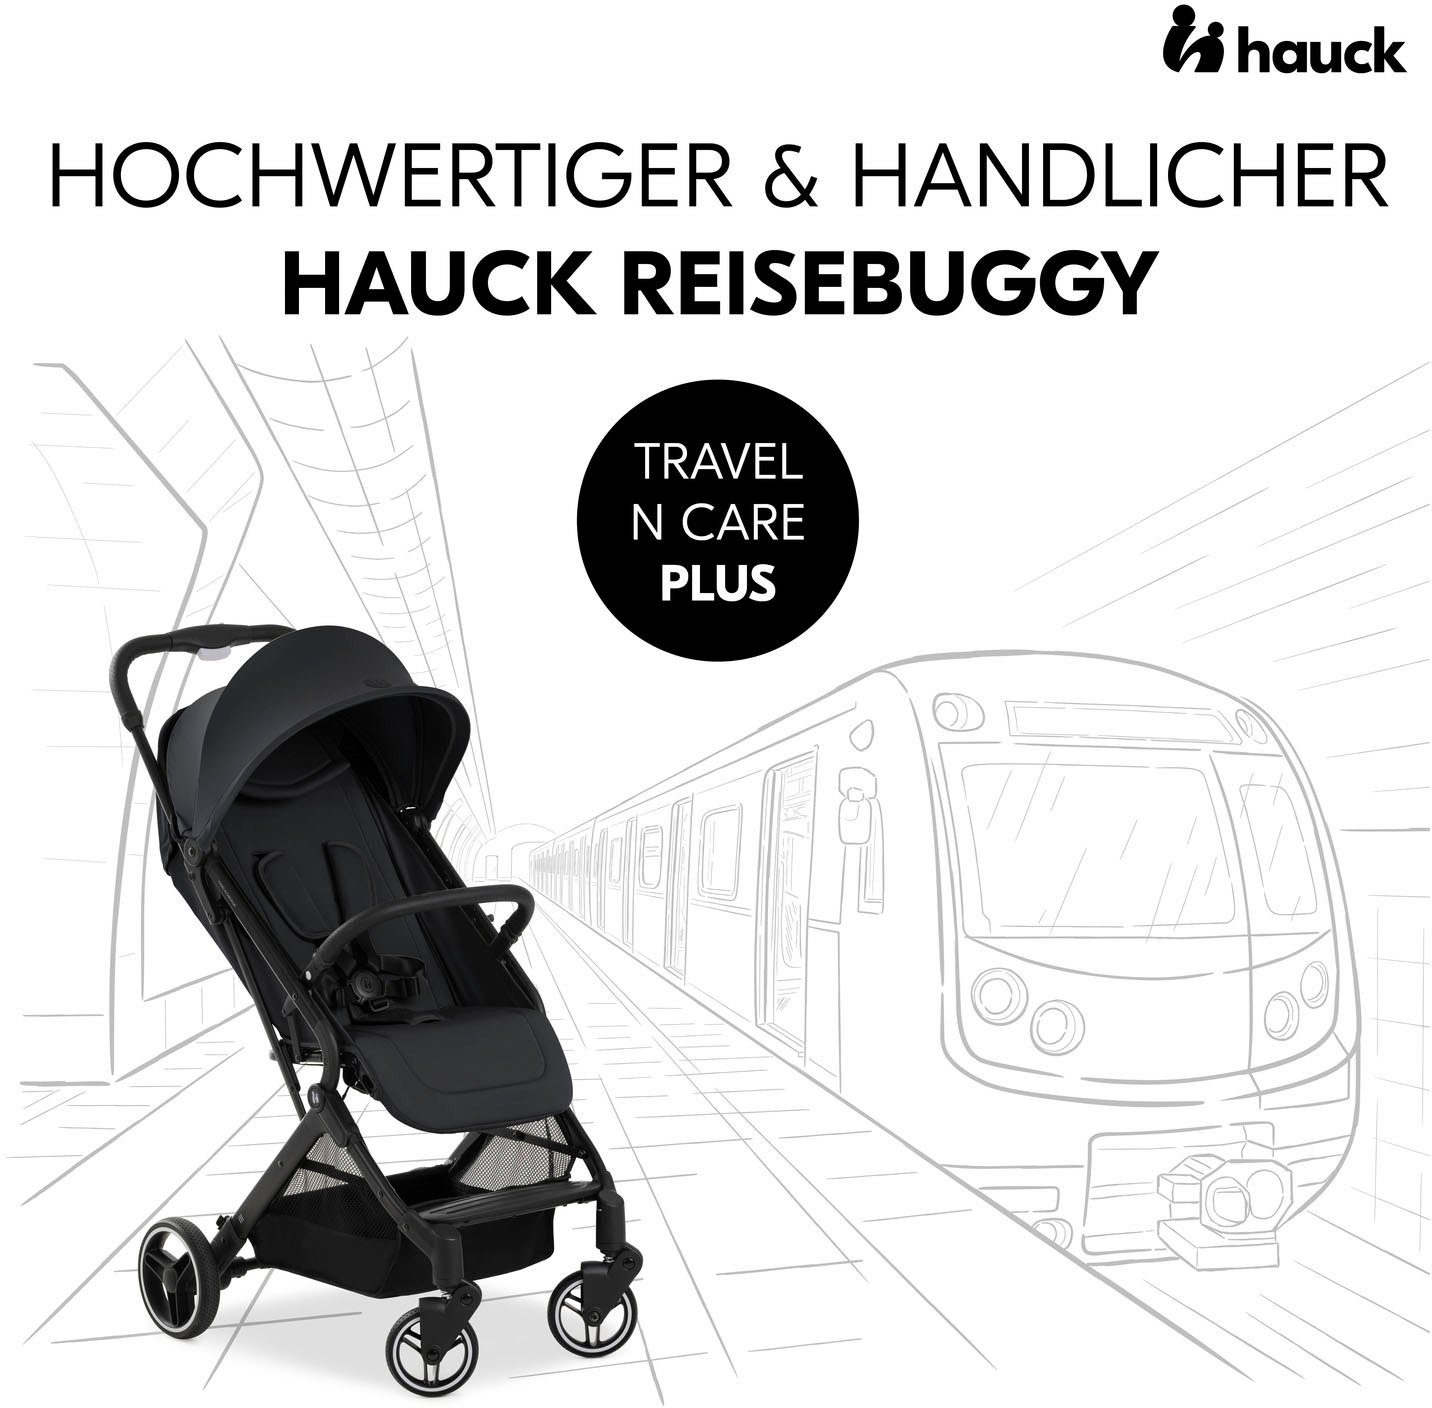 black Travel Care N Hauck Kinder-Buggy Plus,